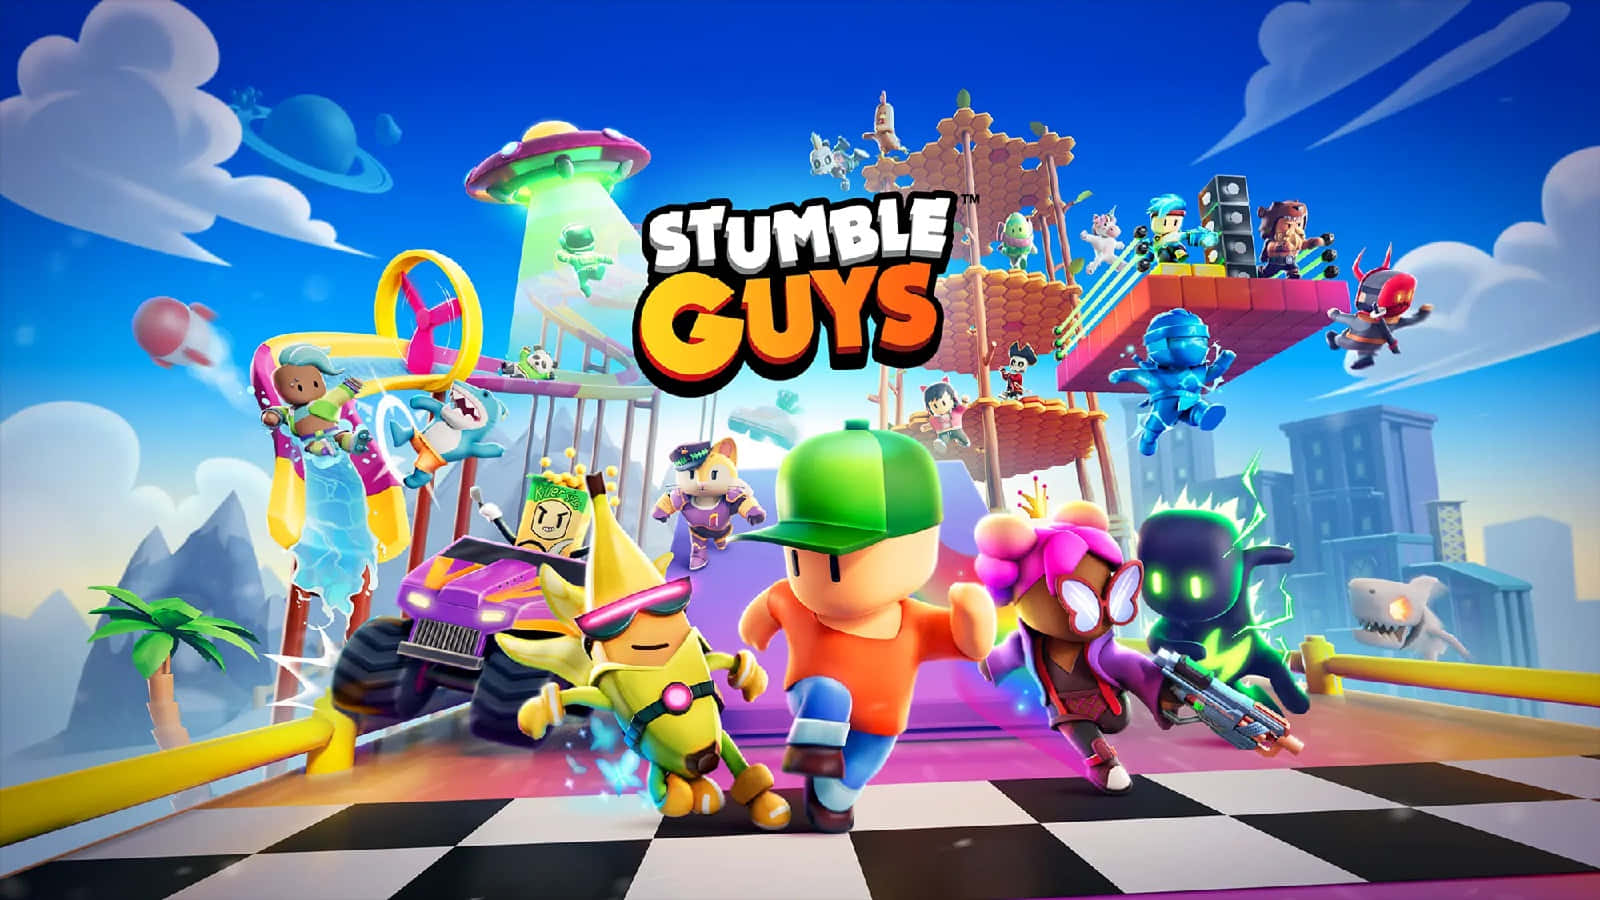 Stumble Guys Gameplay Action Wallpaper